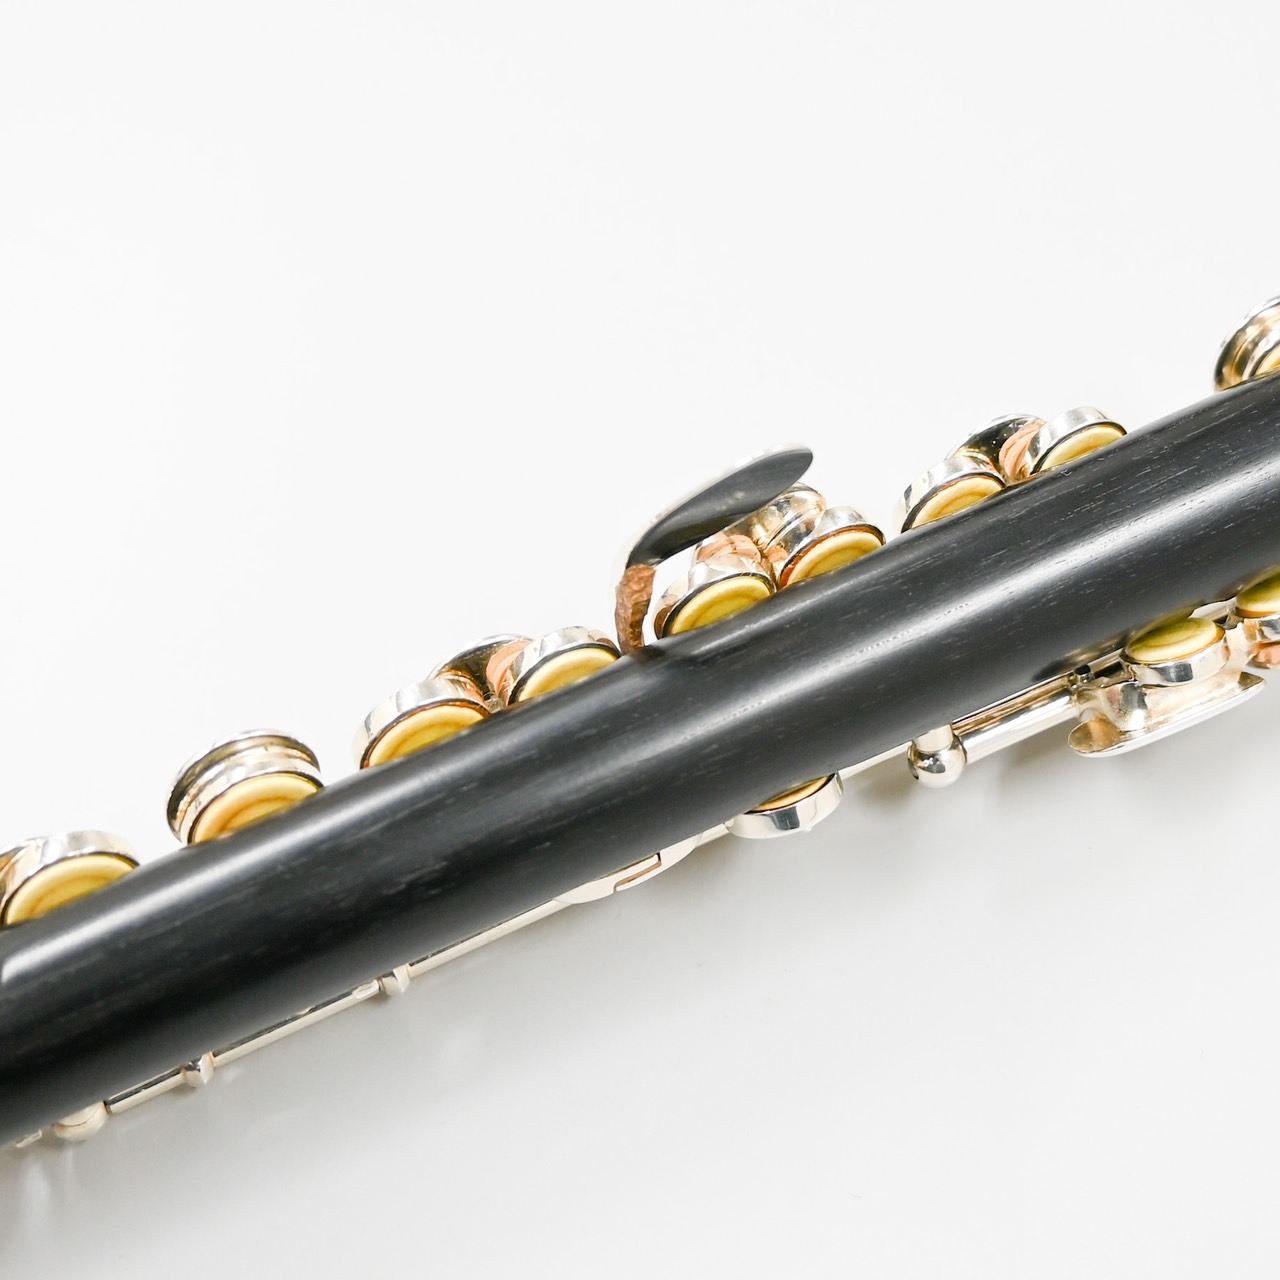 P.hammig 650/2 ピッコロ 頭部管のみ （ハンミッヒ） - 管楽器